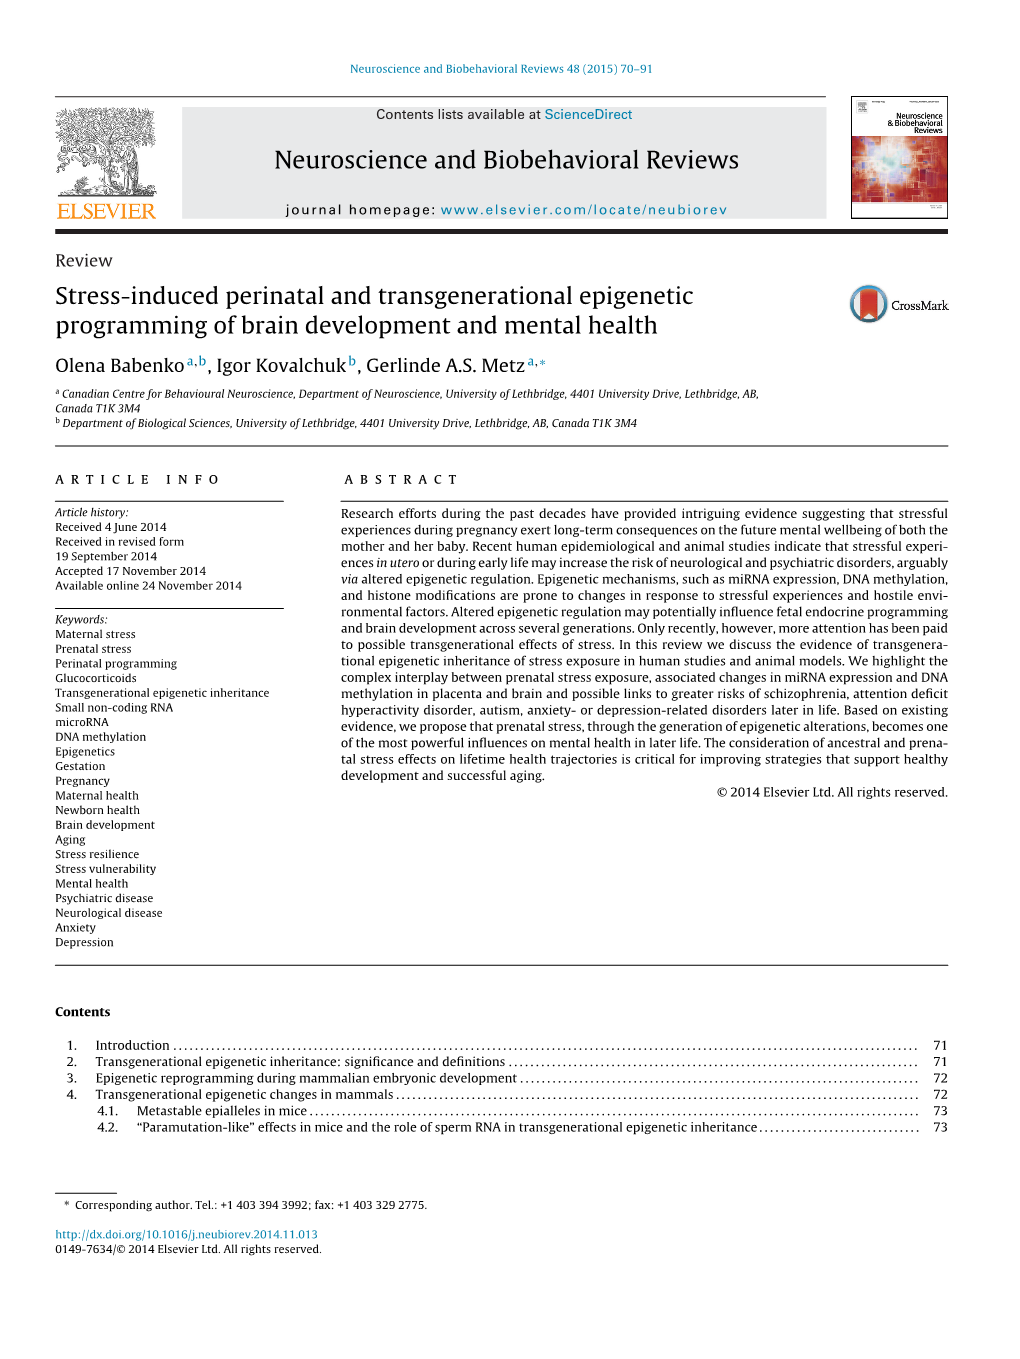 Stress-Induced Perinatal and Transgenerational Epigenetic